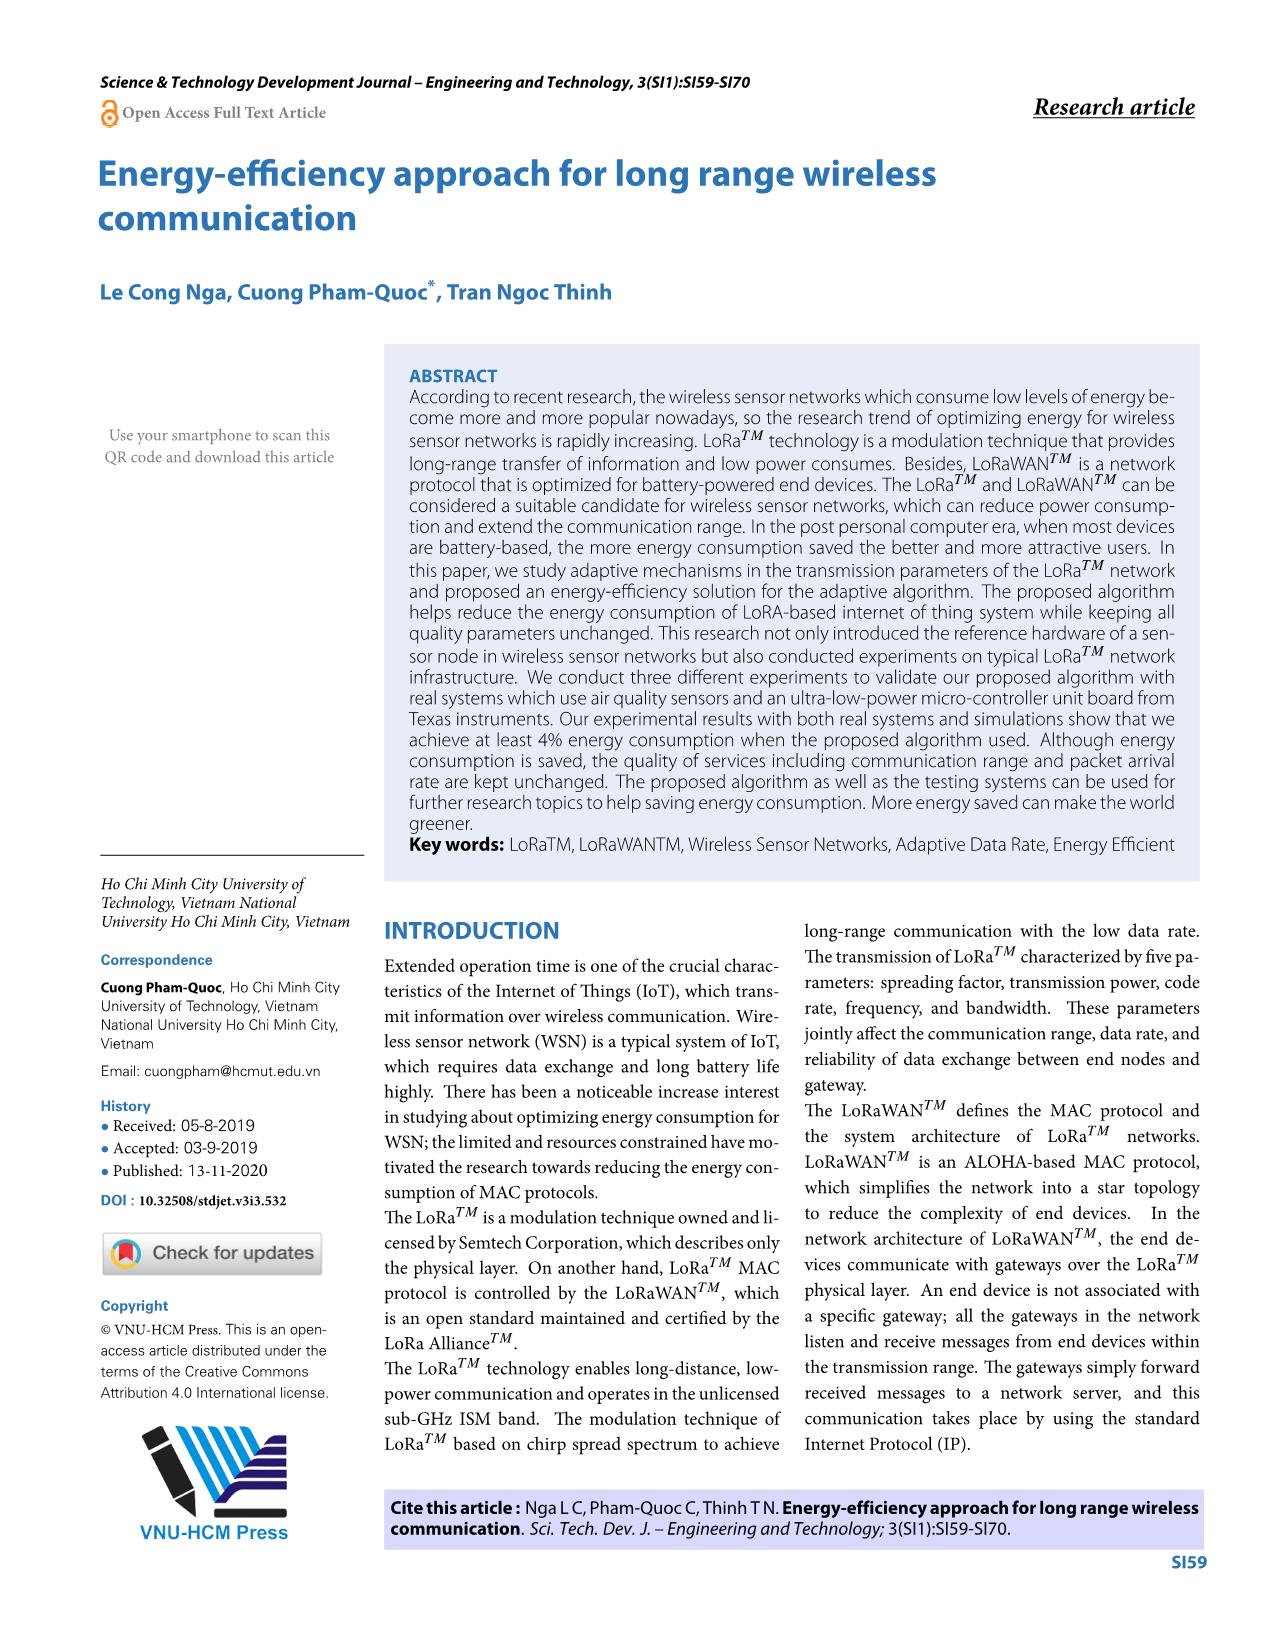 Energy-efficiency approach for long range wireless communication trang 1